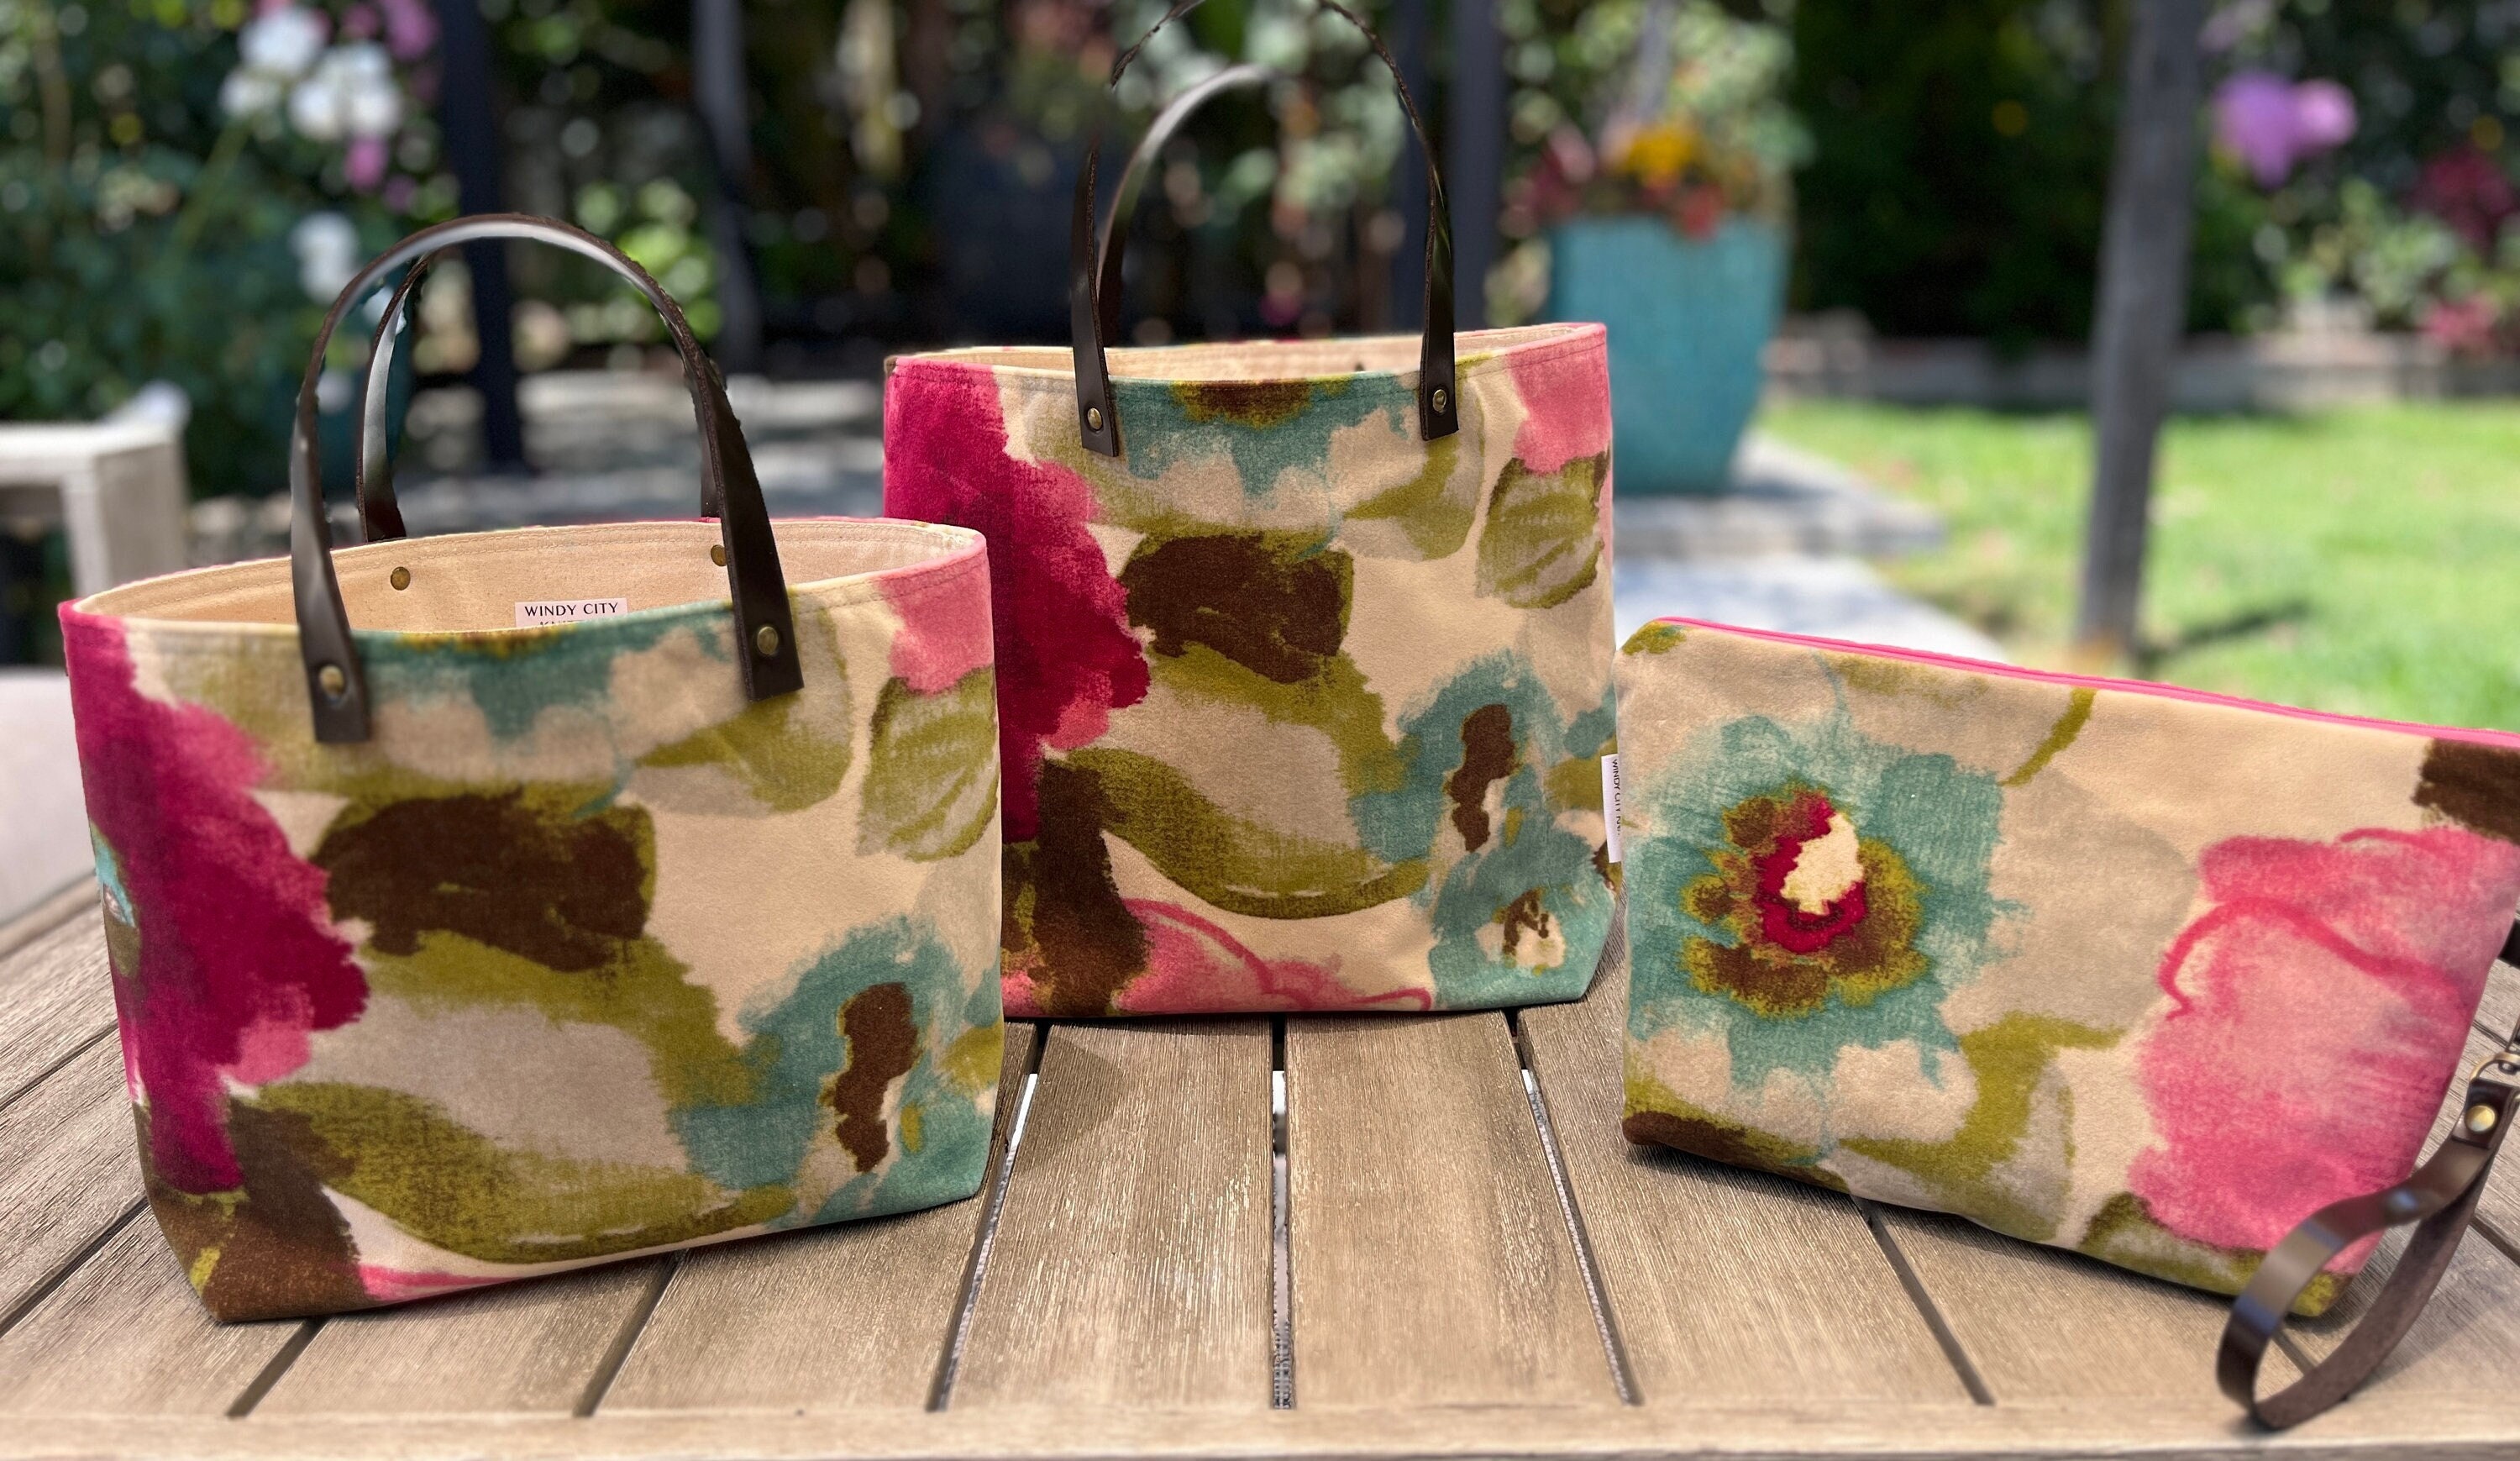 Floral Hand Bag, Tote Bags, Modern Bag, Simple Handbags, Shoulder Shopping  Bags